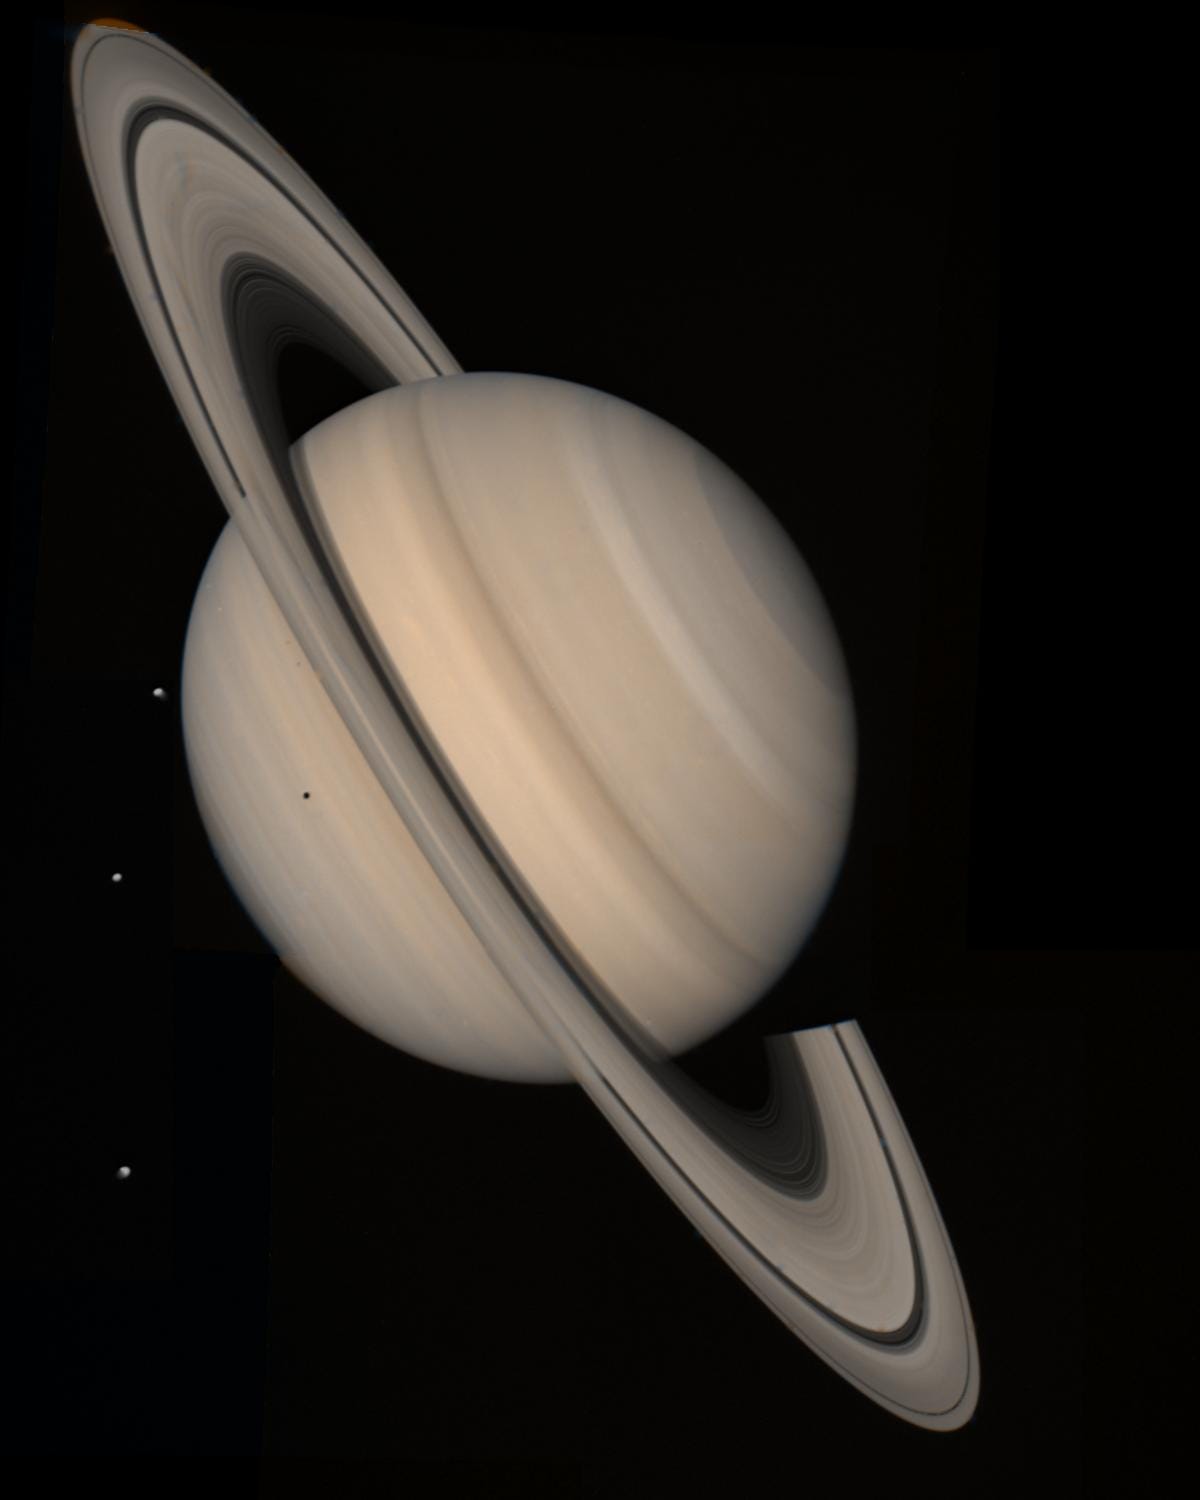 Saturn Taken from Voyager 2